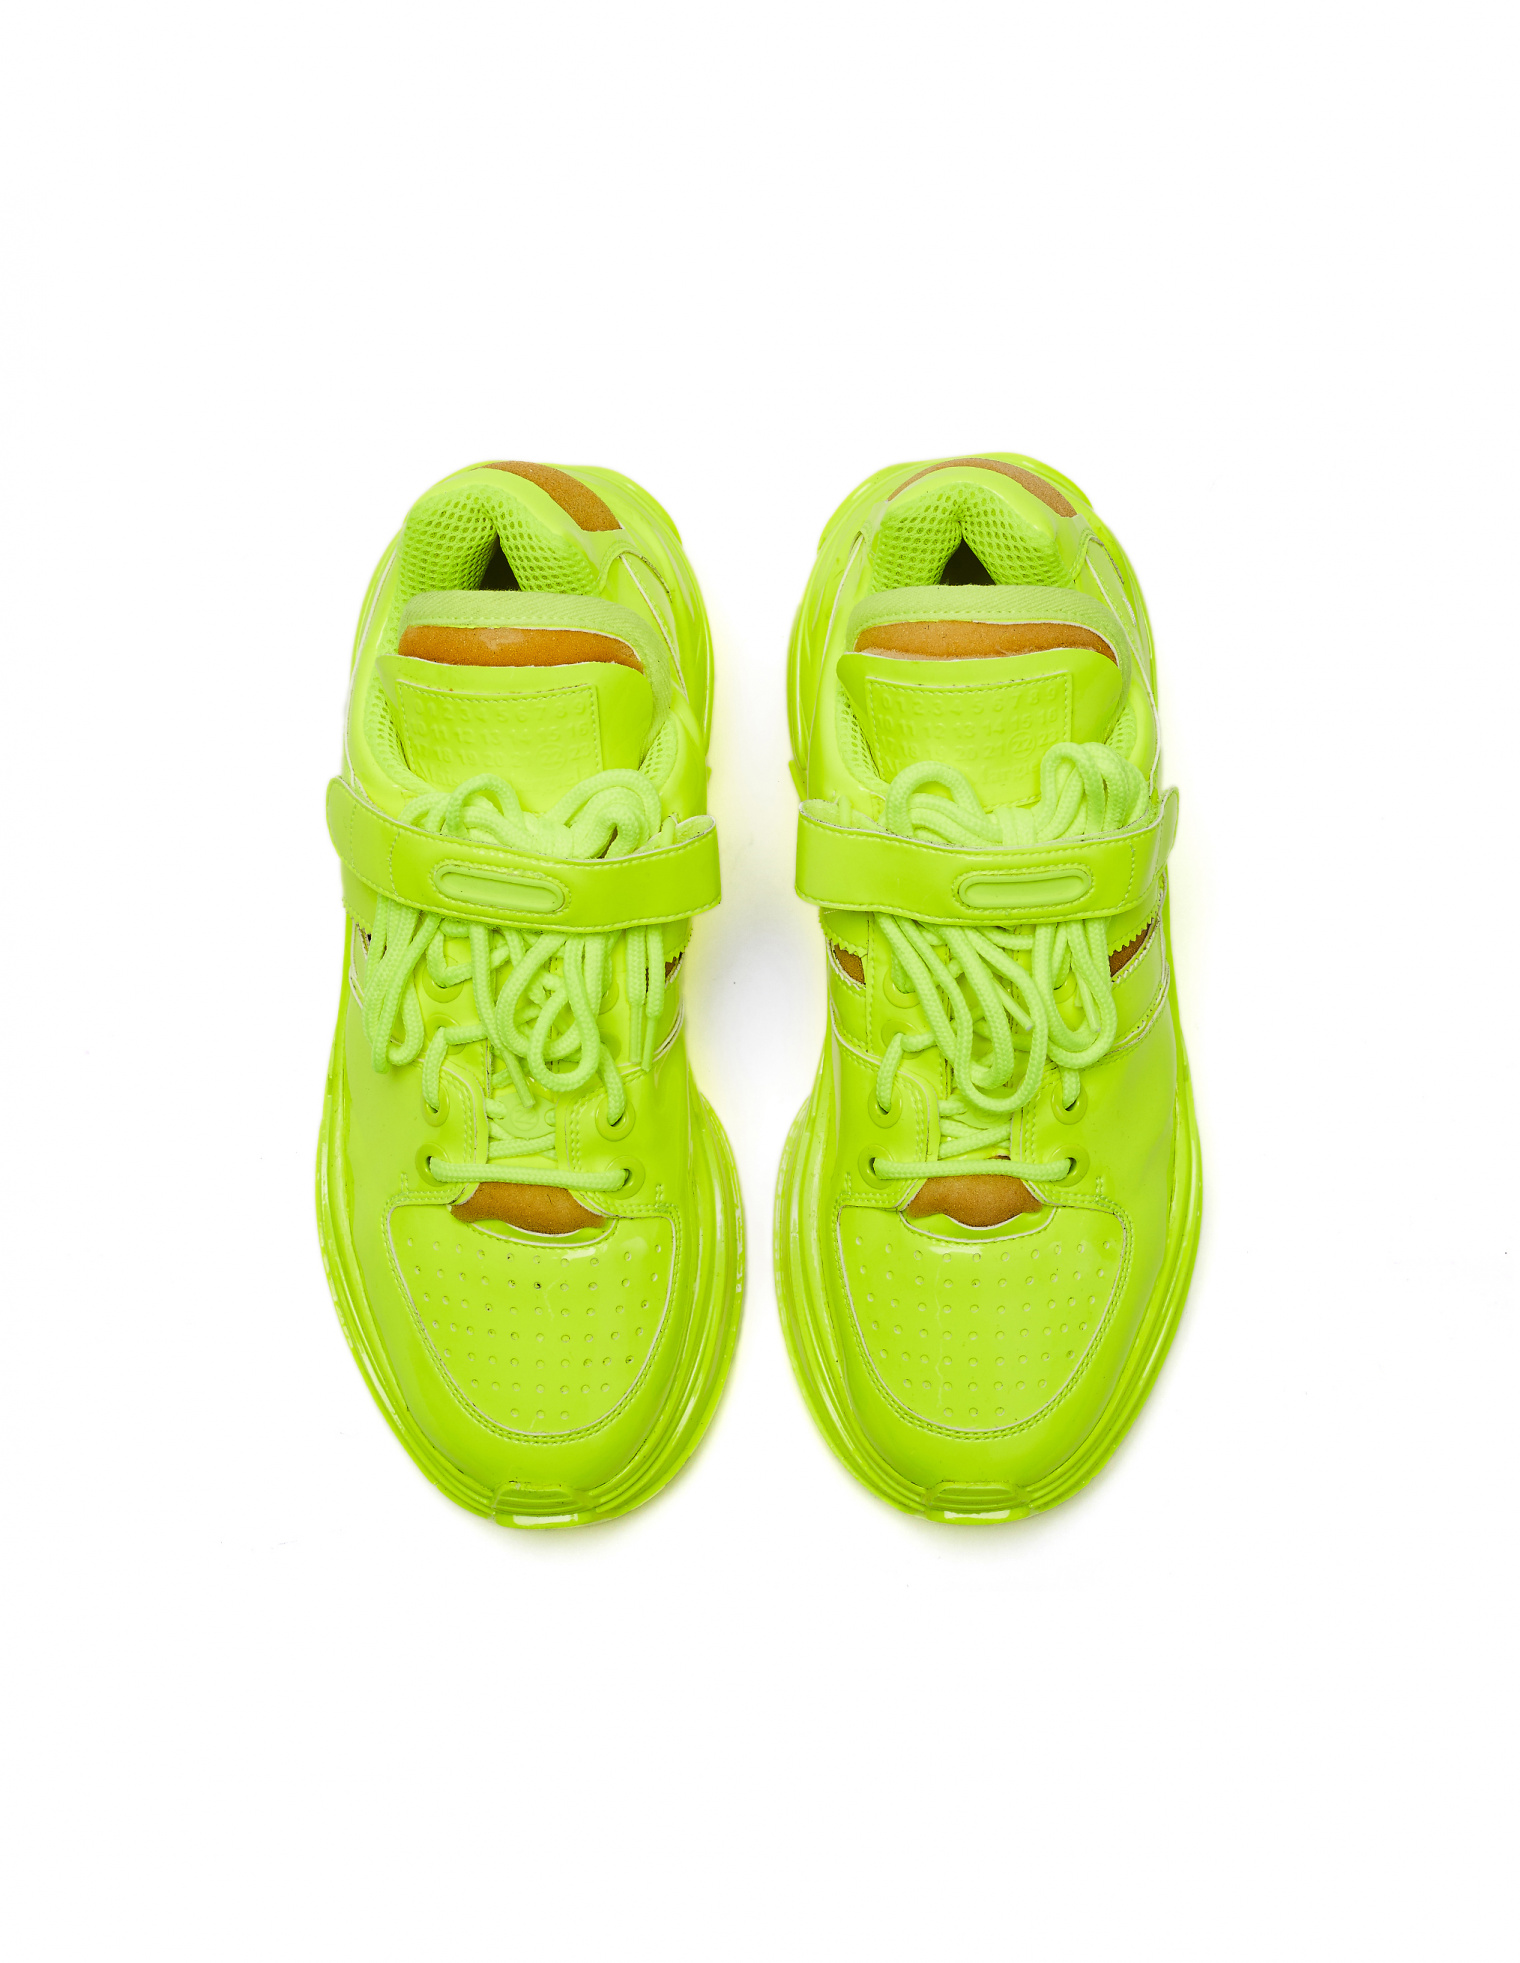 Maison Margiela Neon Yellow Retro Fit Sneakers